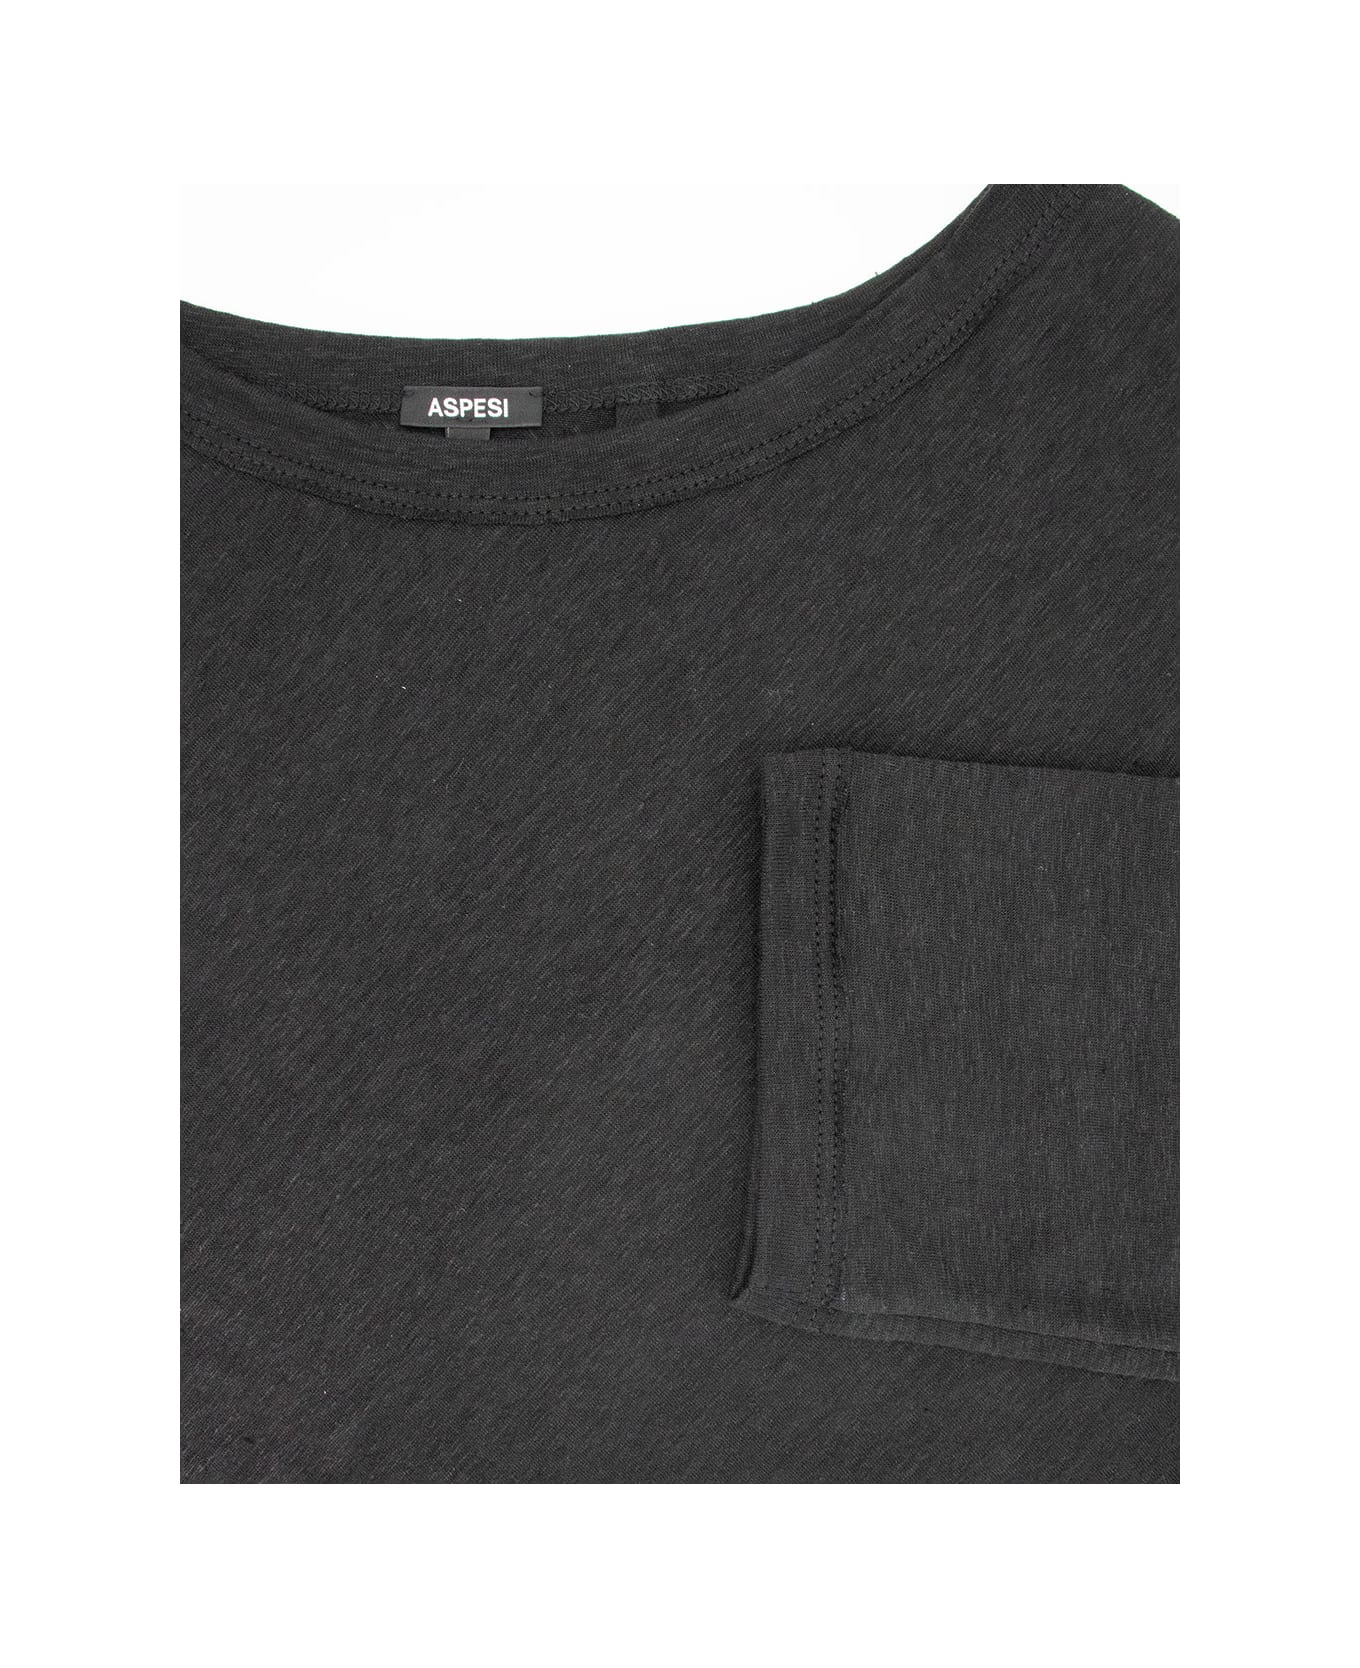 Aspesi T-shirt - BLACK